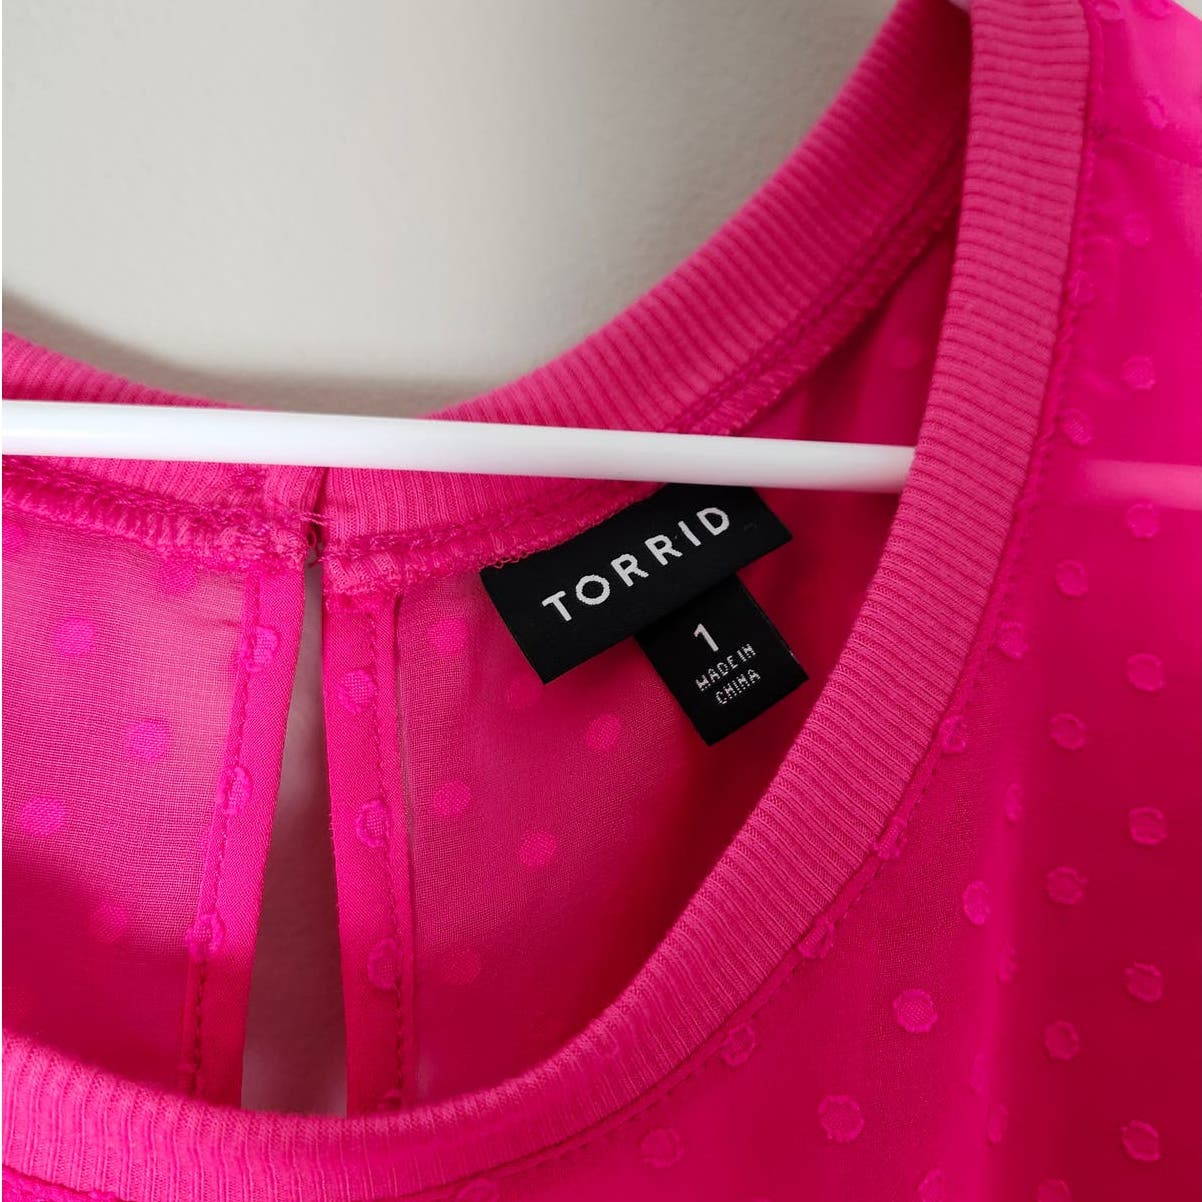 Torrid Blouse Plus Size 1X Hot Pink Clip Dot Chiffon Short Puff Sleeve Sheer